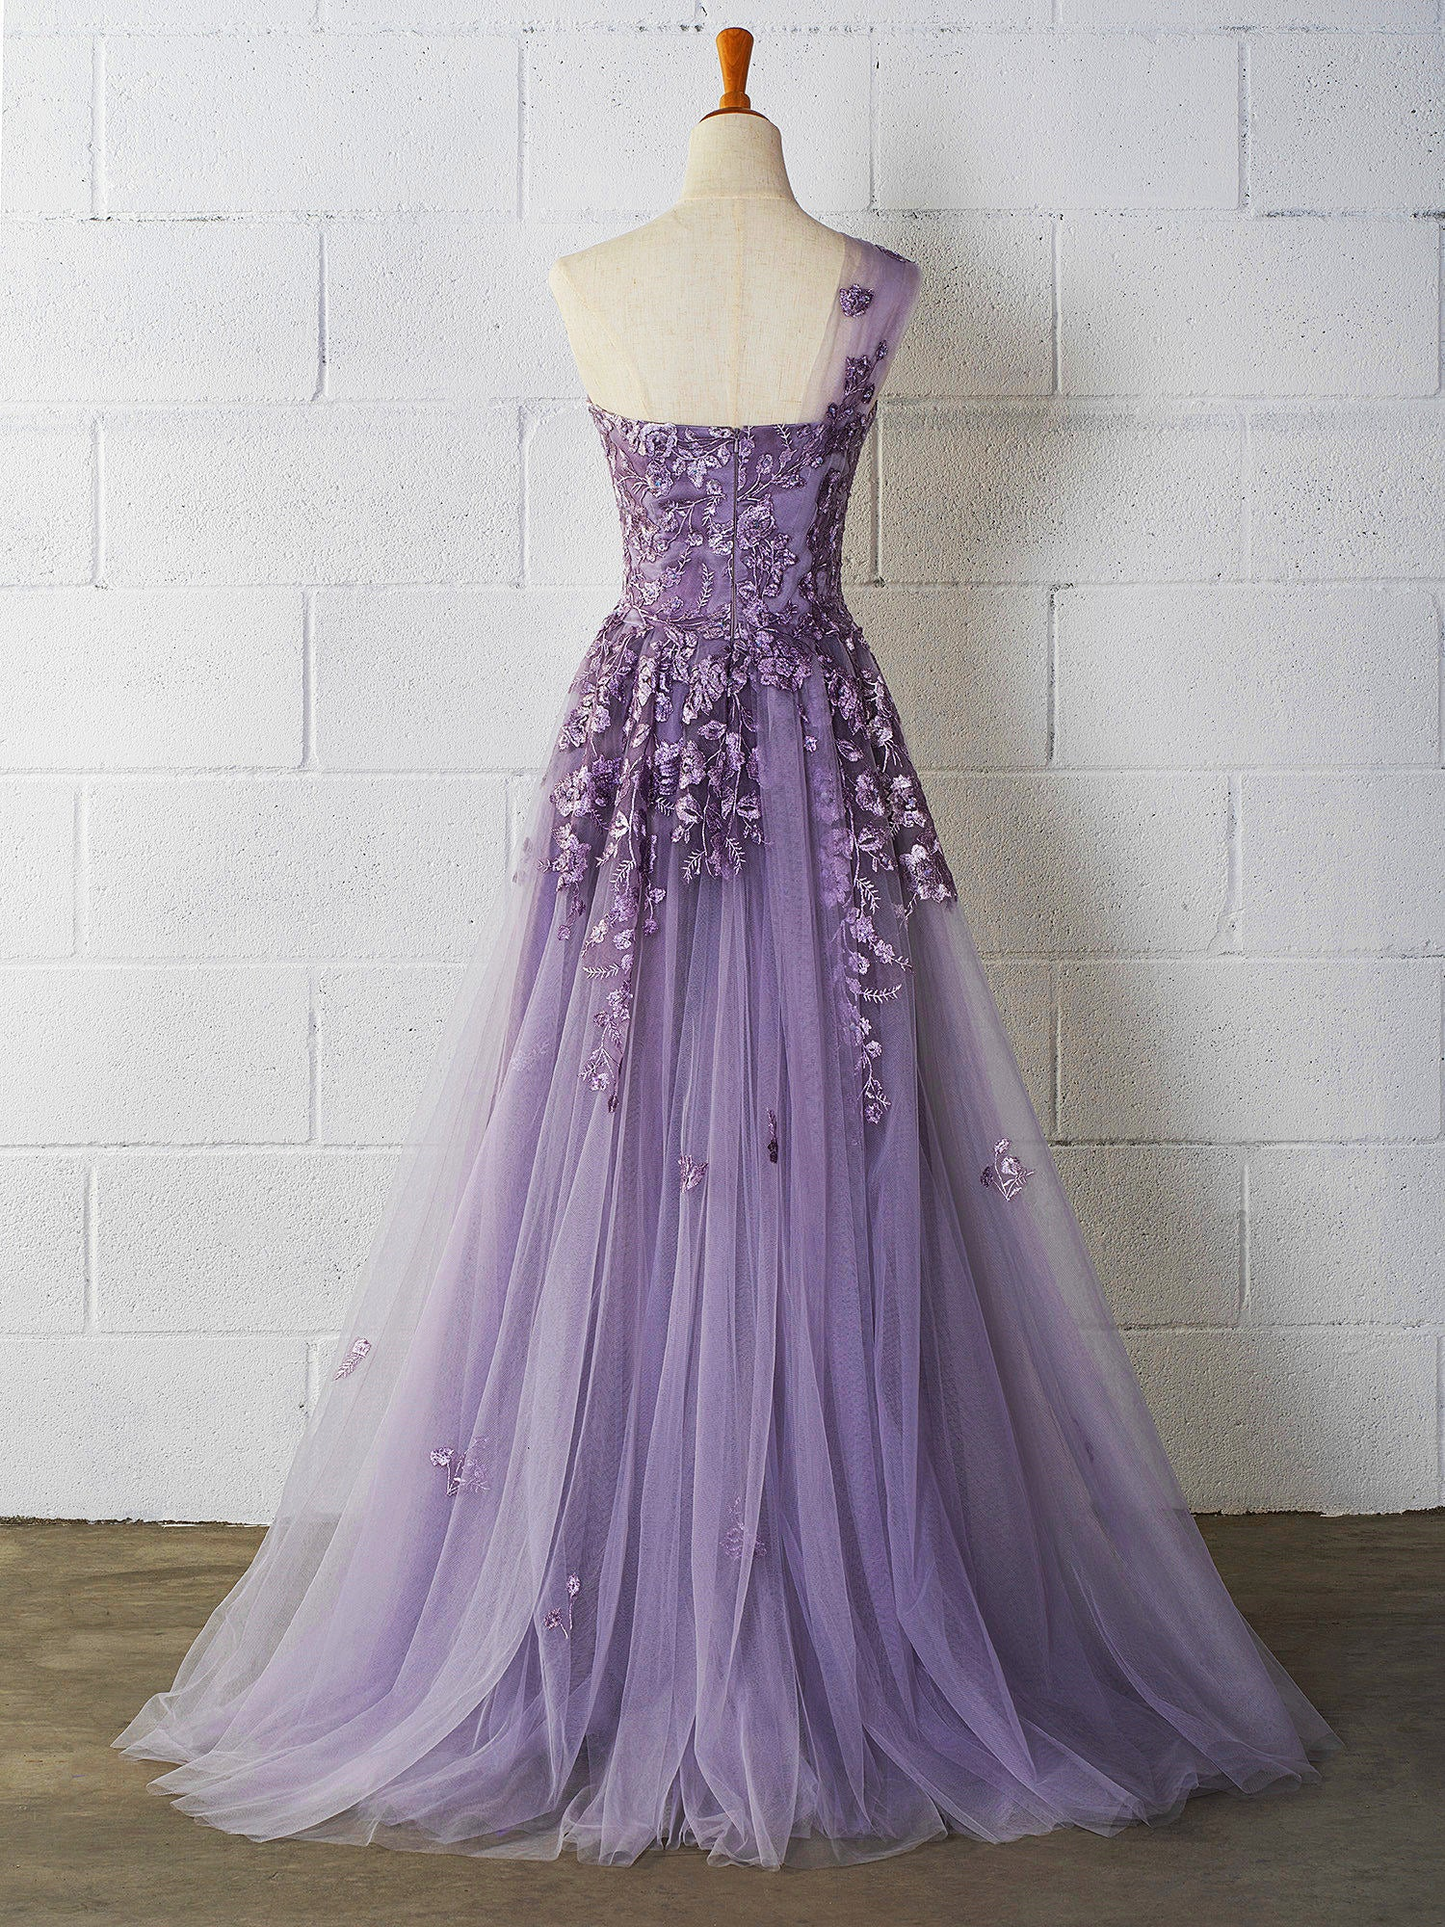 Sweetheart Tulle One Shoulder Floor Length Prom Dress Y895